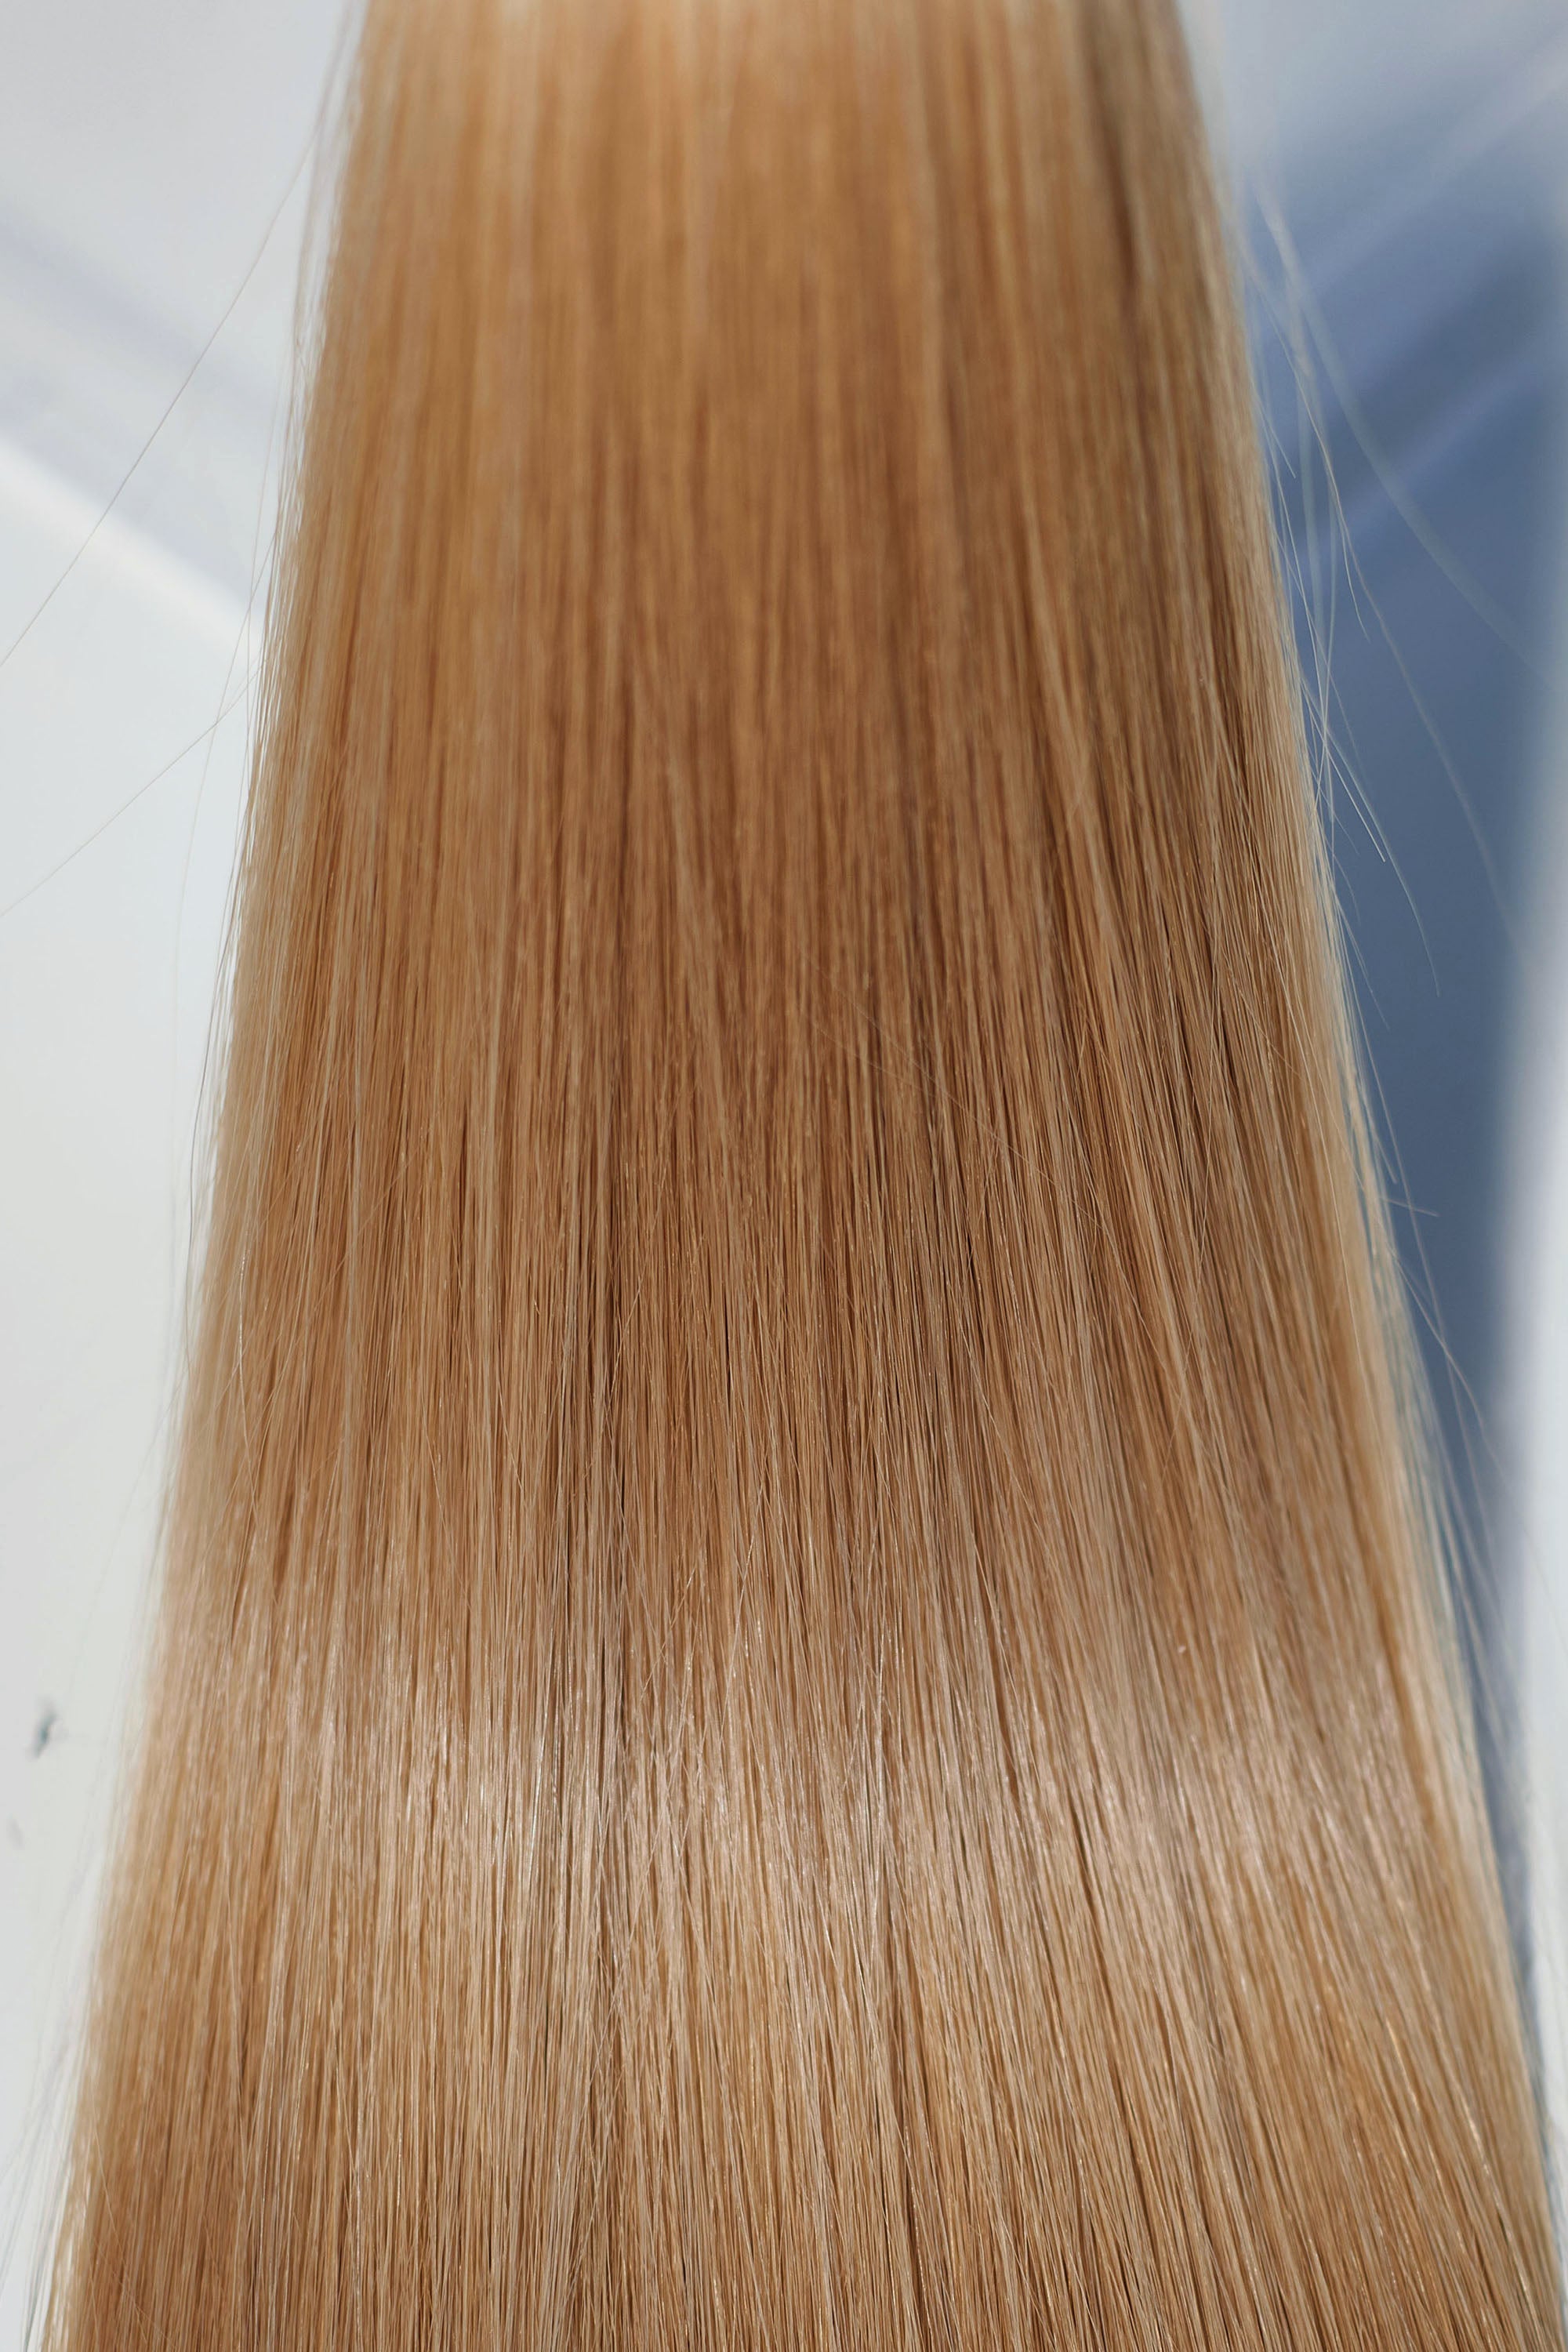 Behair professional Keratin Tip "Premium" 28" (70cm) Natural Straight Gold Sand #18 - 25g (1g each pcs) hair extensions